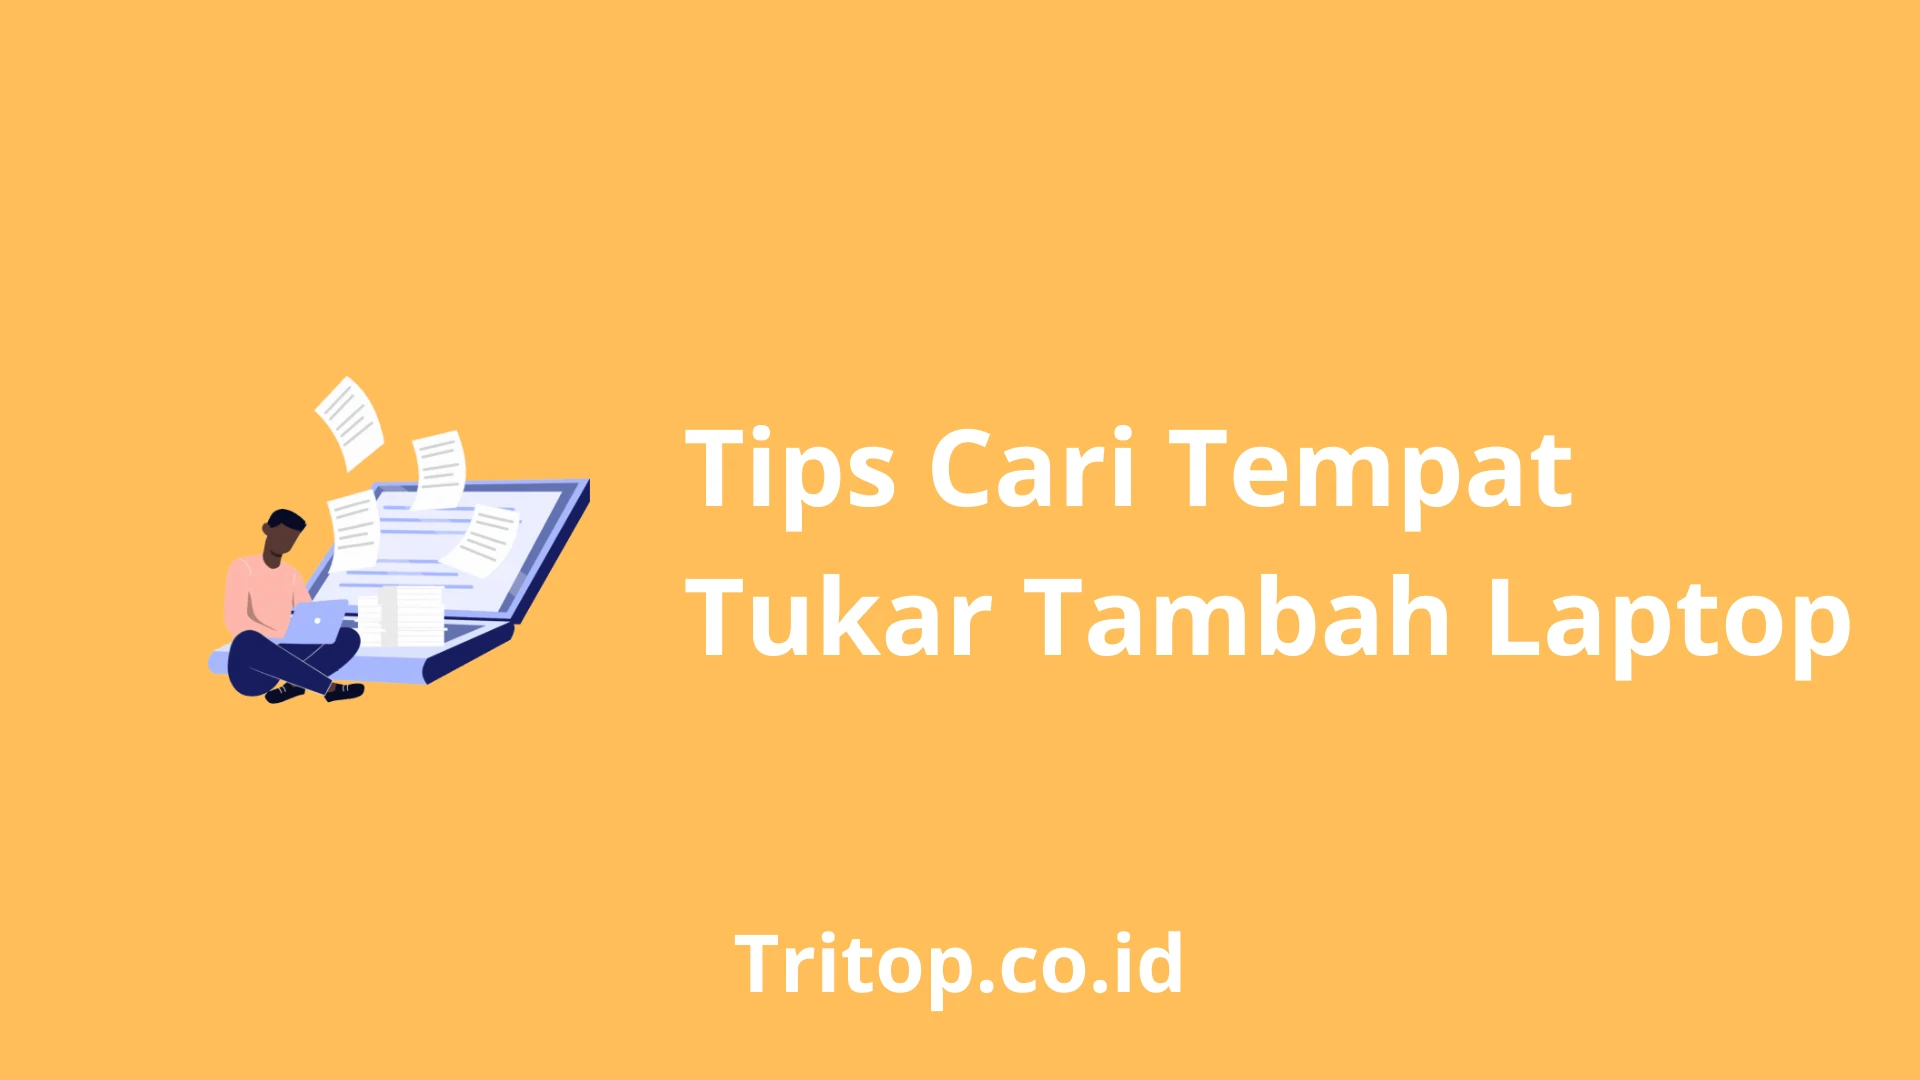 Tempat Tukar Tambah Laptop tritop.co.id